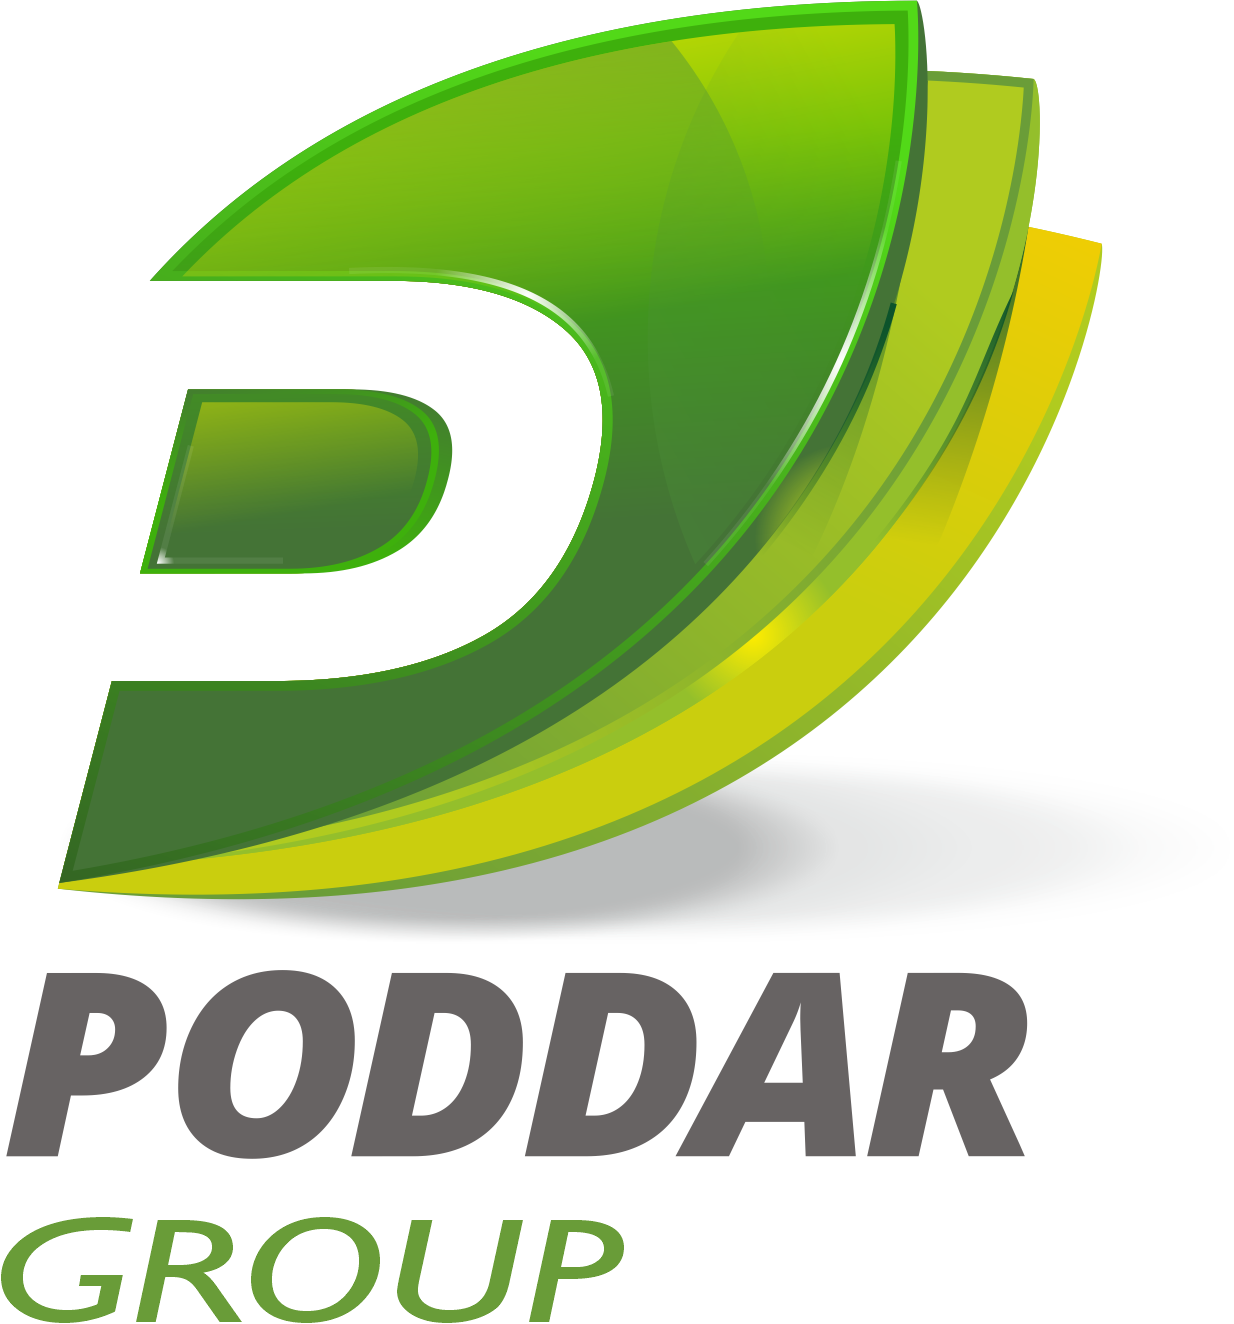 Poddarr Group